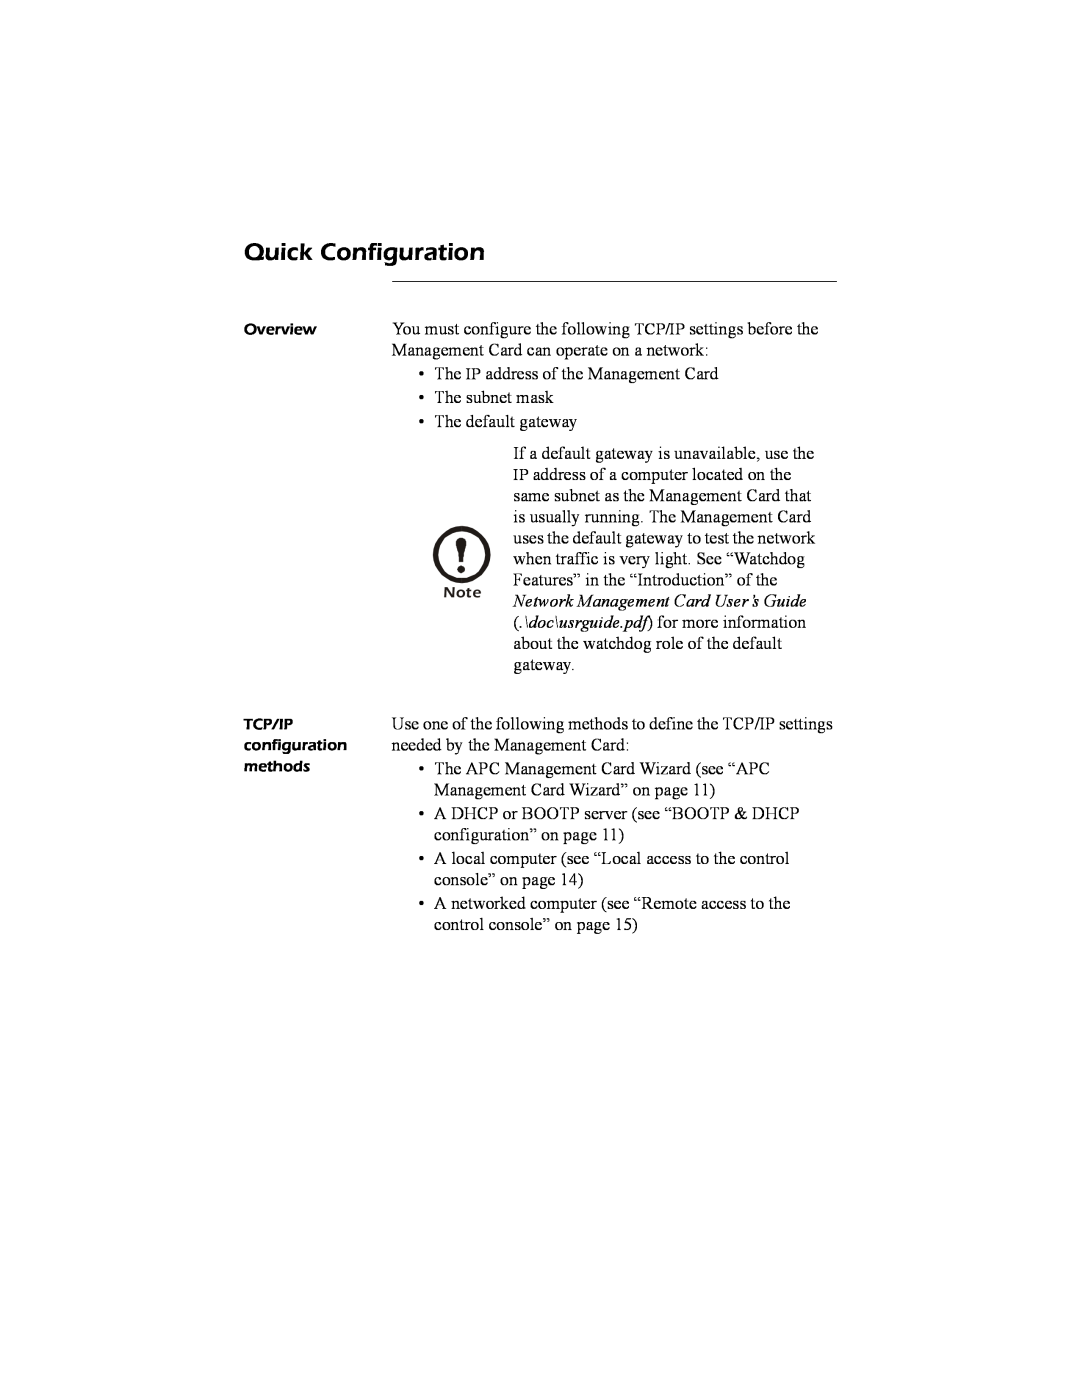 APC AP9617 quick start manual Quick Configuration, Network Management Card User’s Guide 